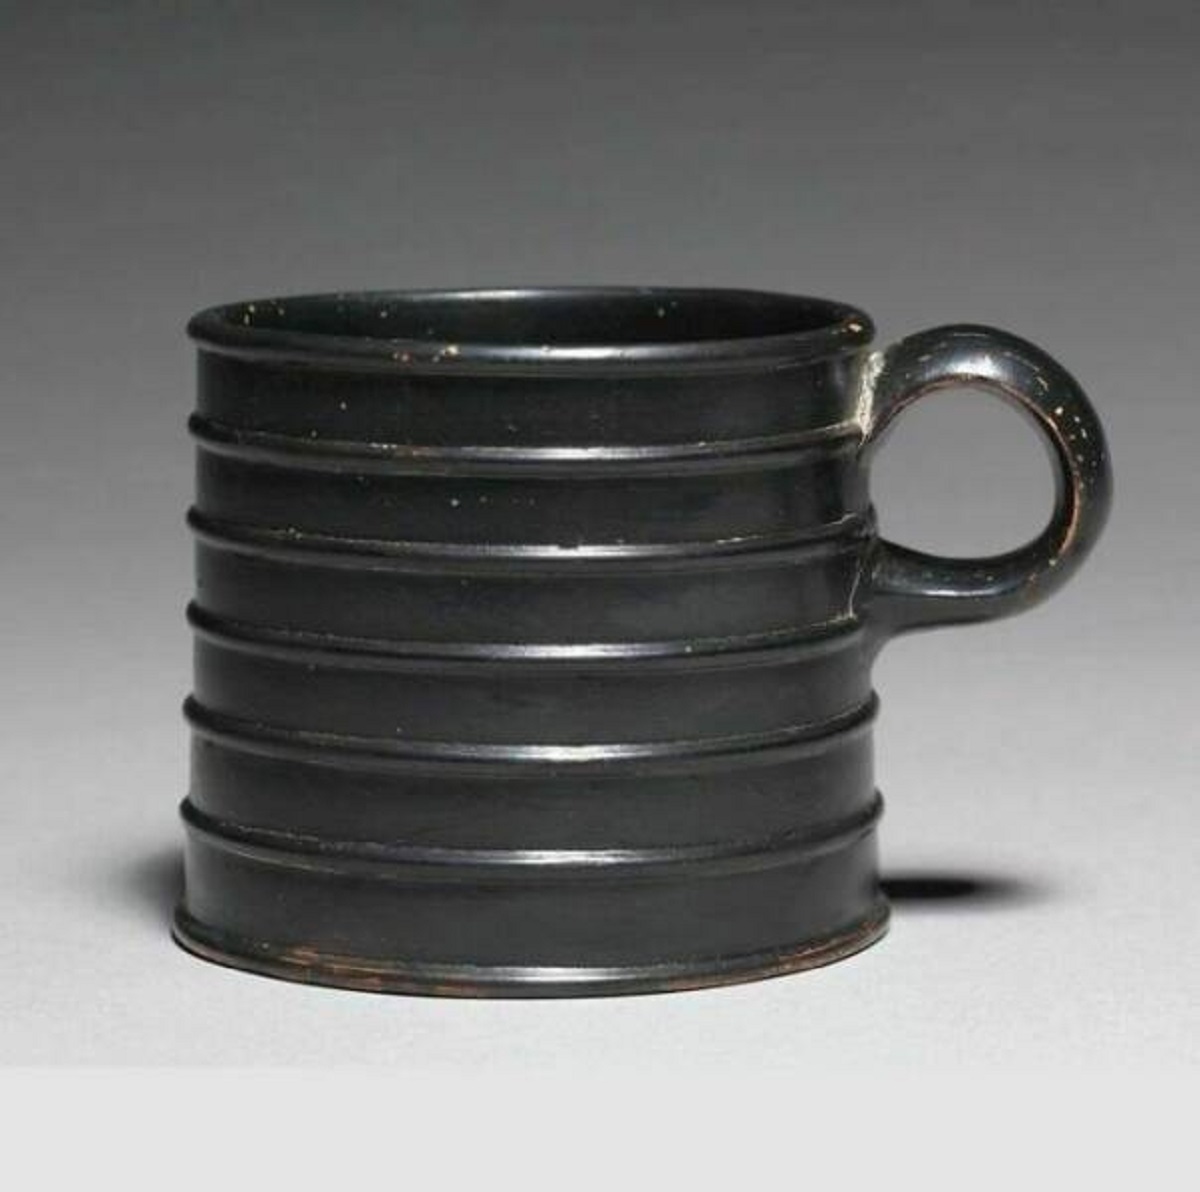 "A Black Mug. Southern Italy, 2400(!) Years Old"